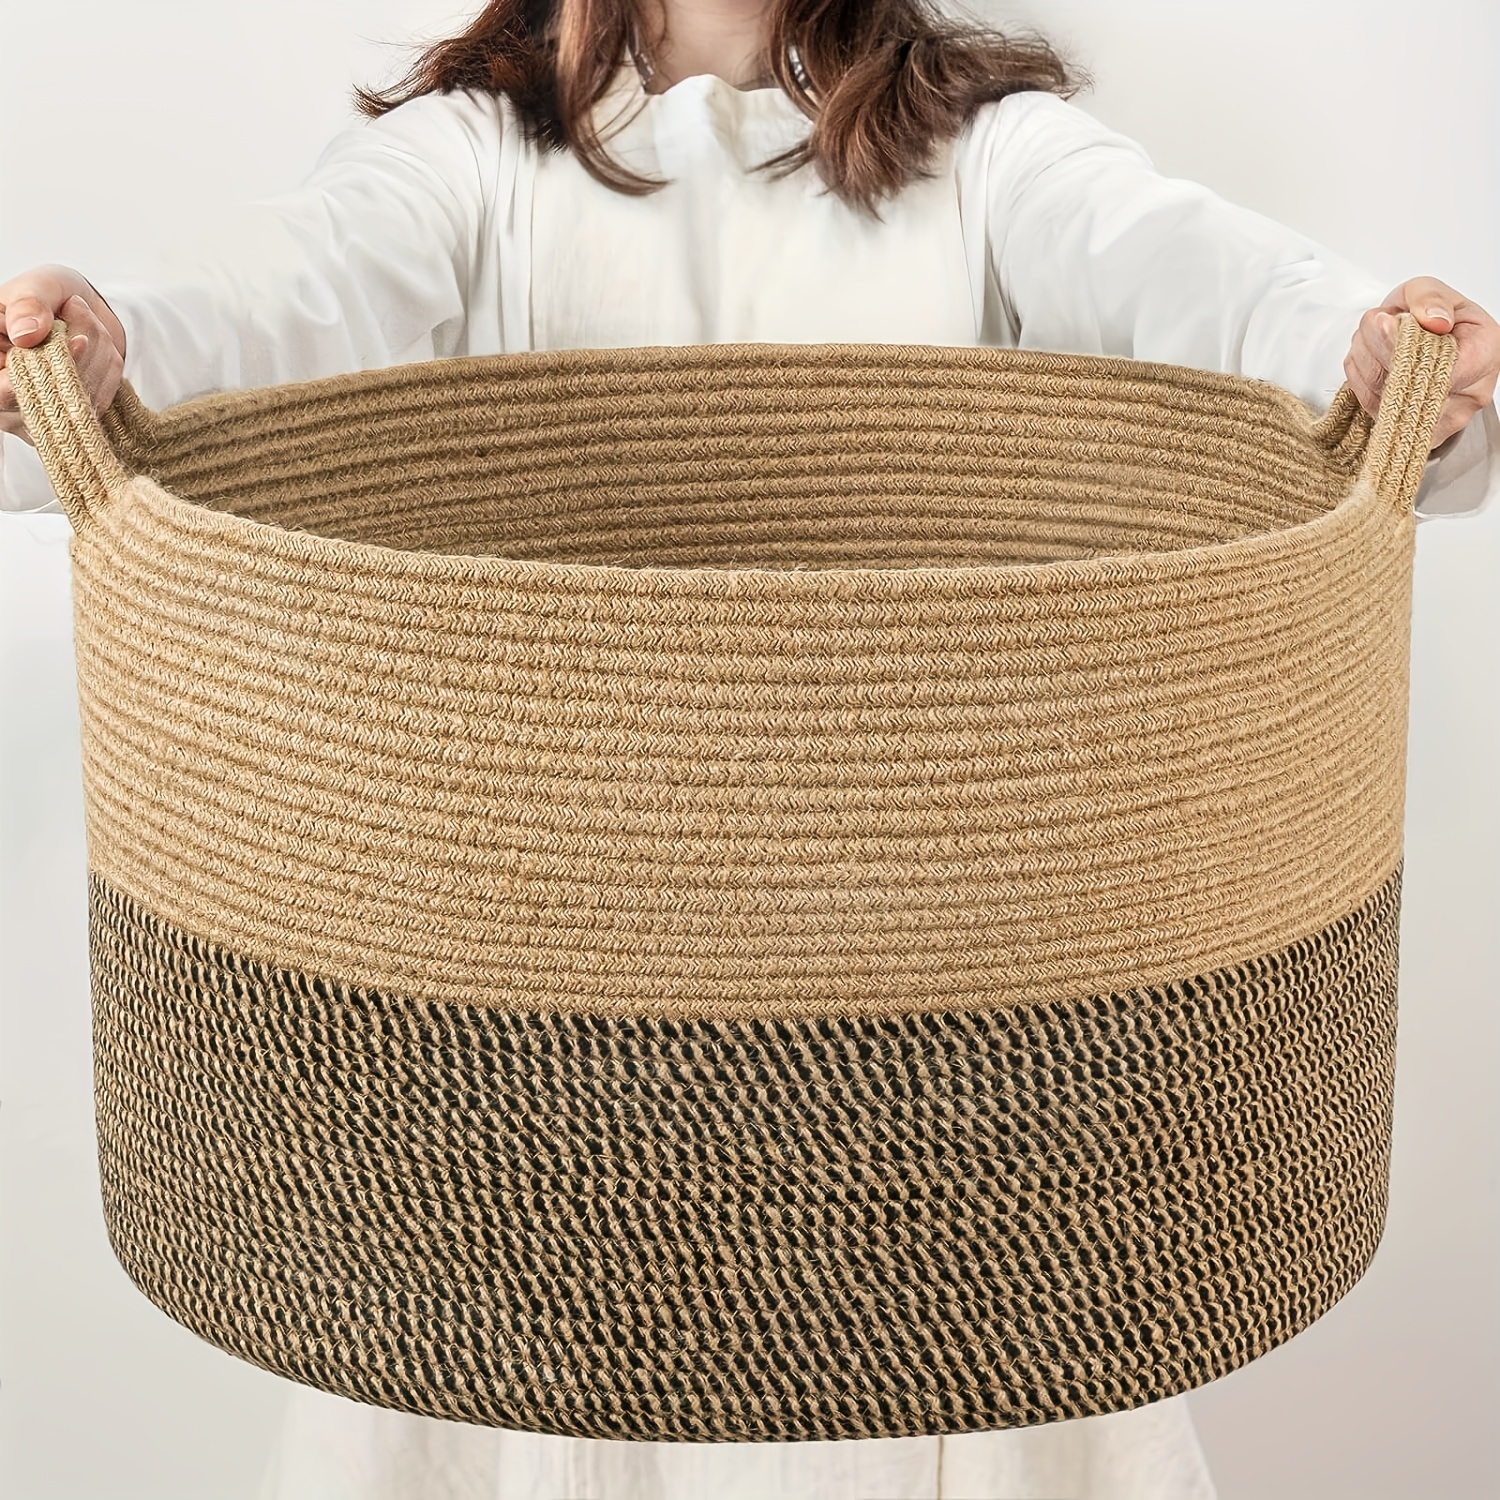 Firewood Basket, Felt Basket, Foldable Firewood Basket, Extra Thick Felt  And Reinforced Handle, Foldable Wood Basket, Felt Bag As Storage Basket For